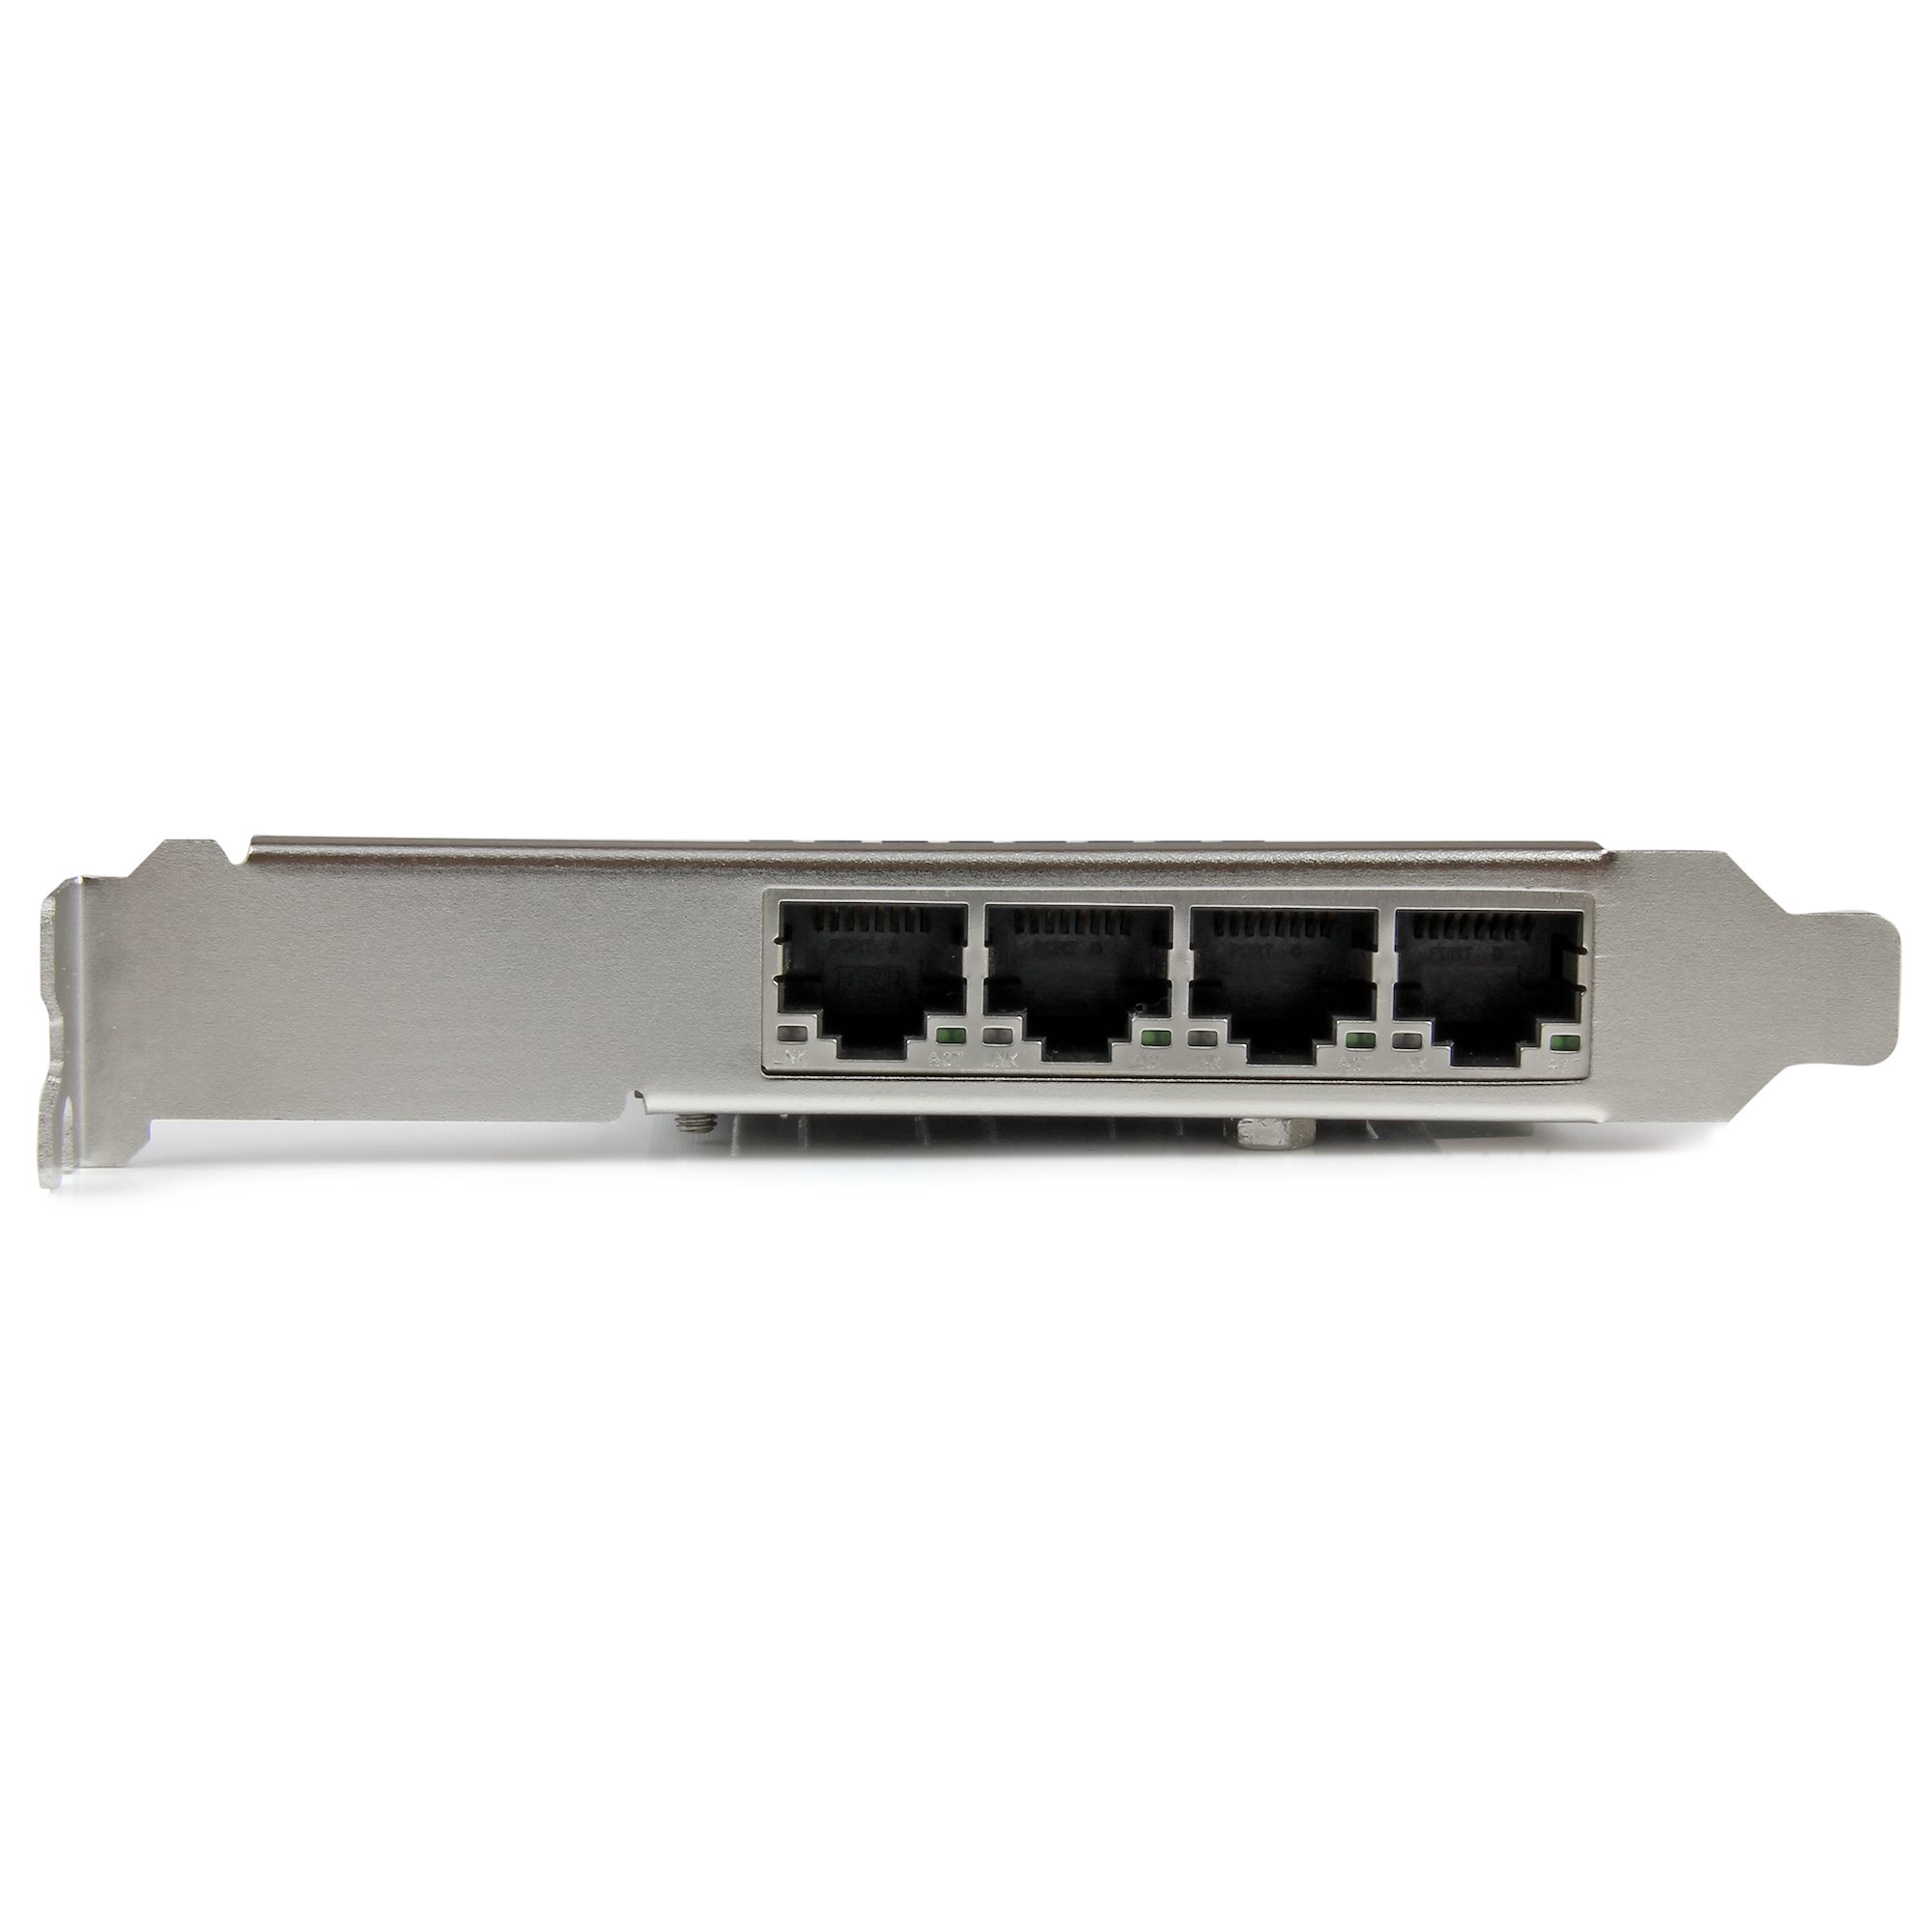 Tarjeta Adaptador de Red PCI Express PCI-E Ethernet Gigabit con 4 Puertos RJ45 de 1 Gbps y Chipset Intel i350 Startech ST4000SPEXI 